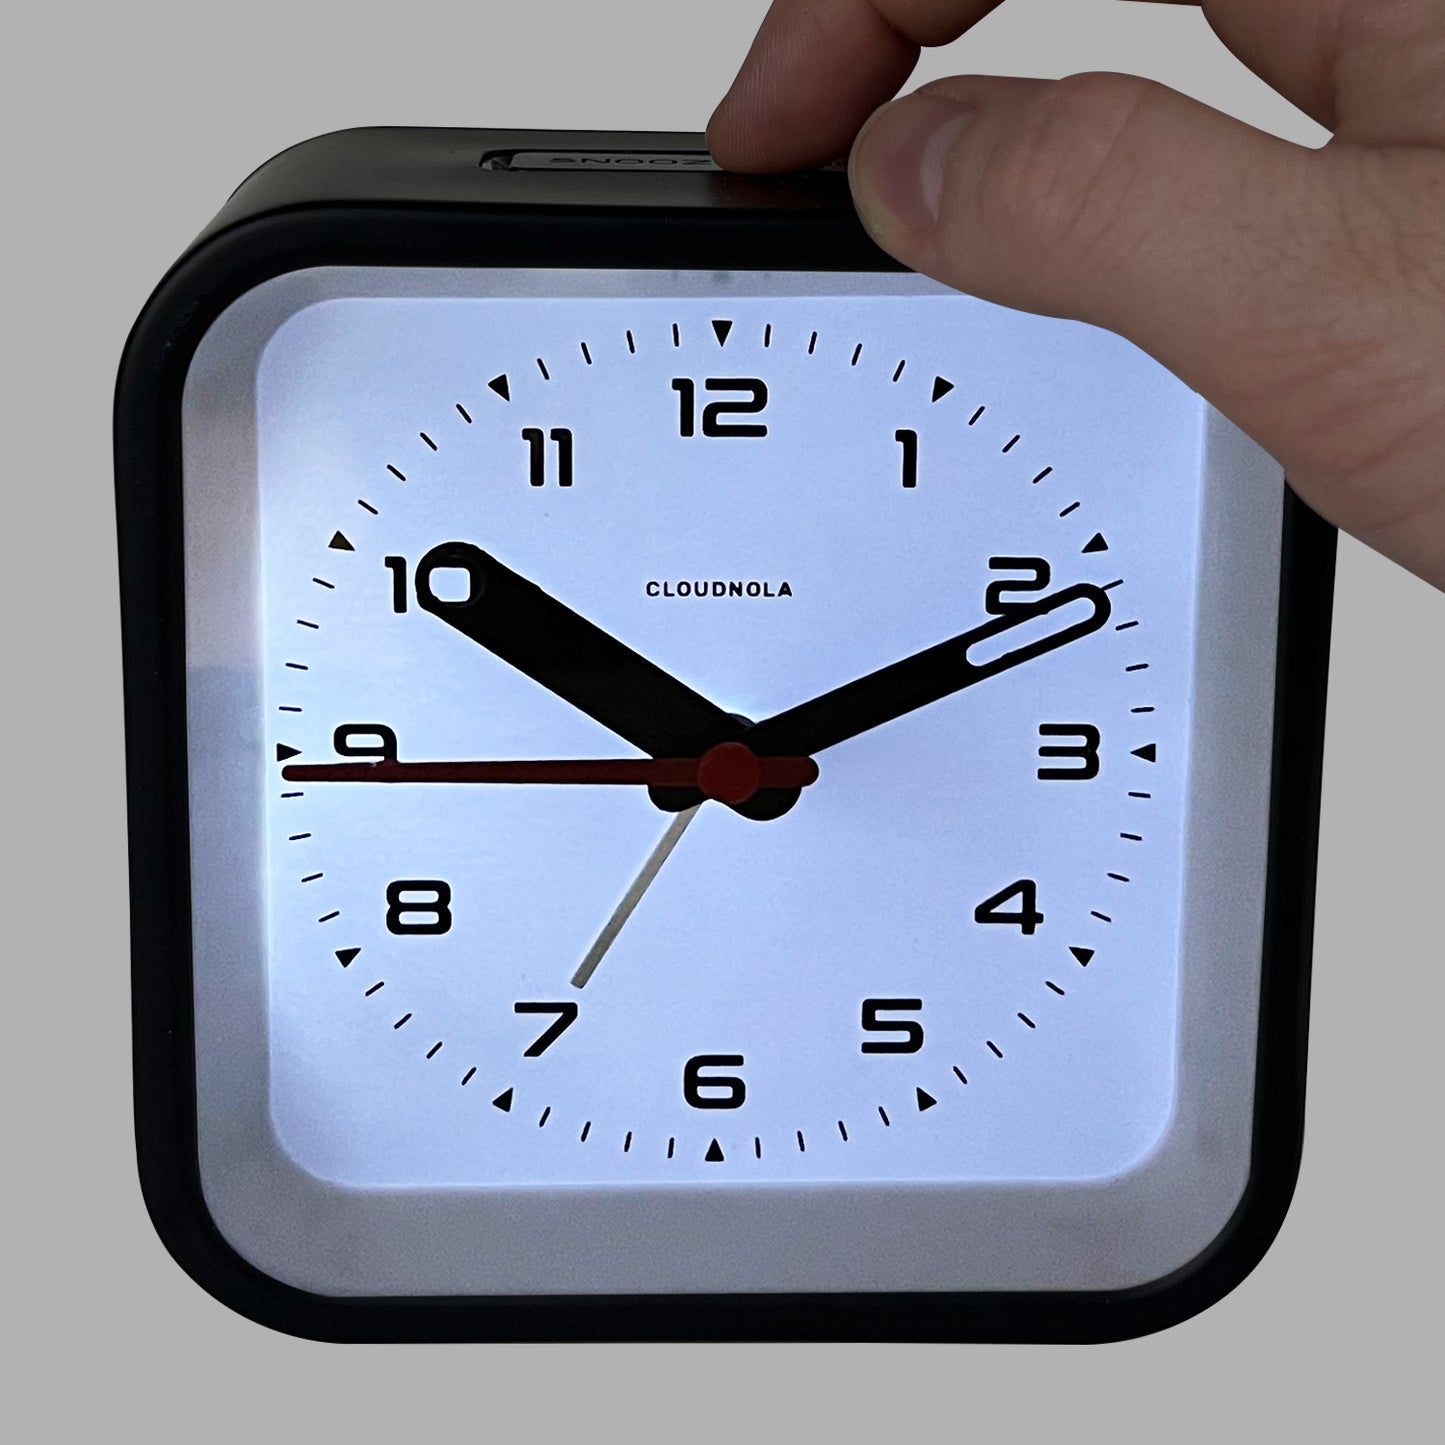 Railway Black Alarm Clock - Square Design - Silent with Snooze & LED Light